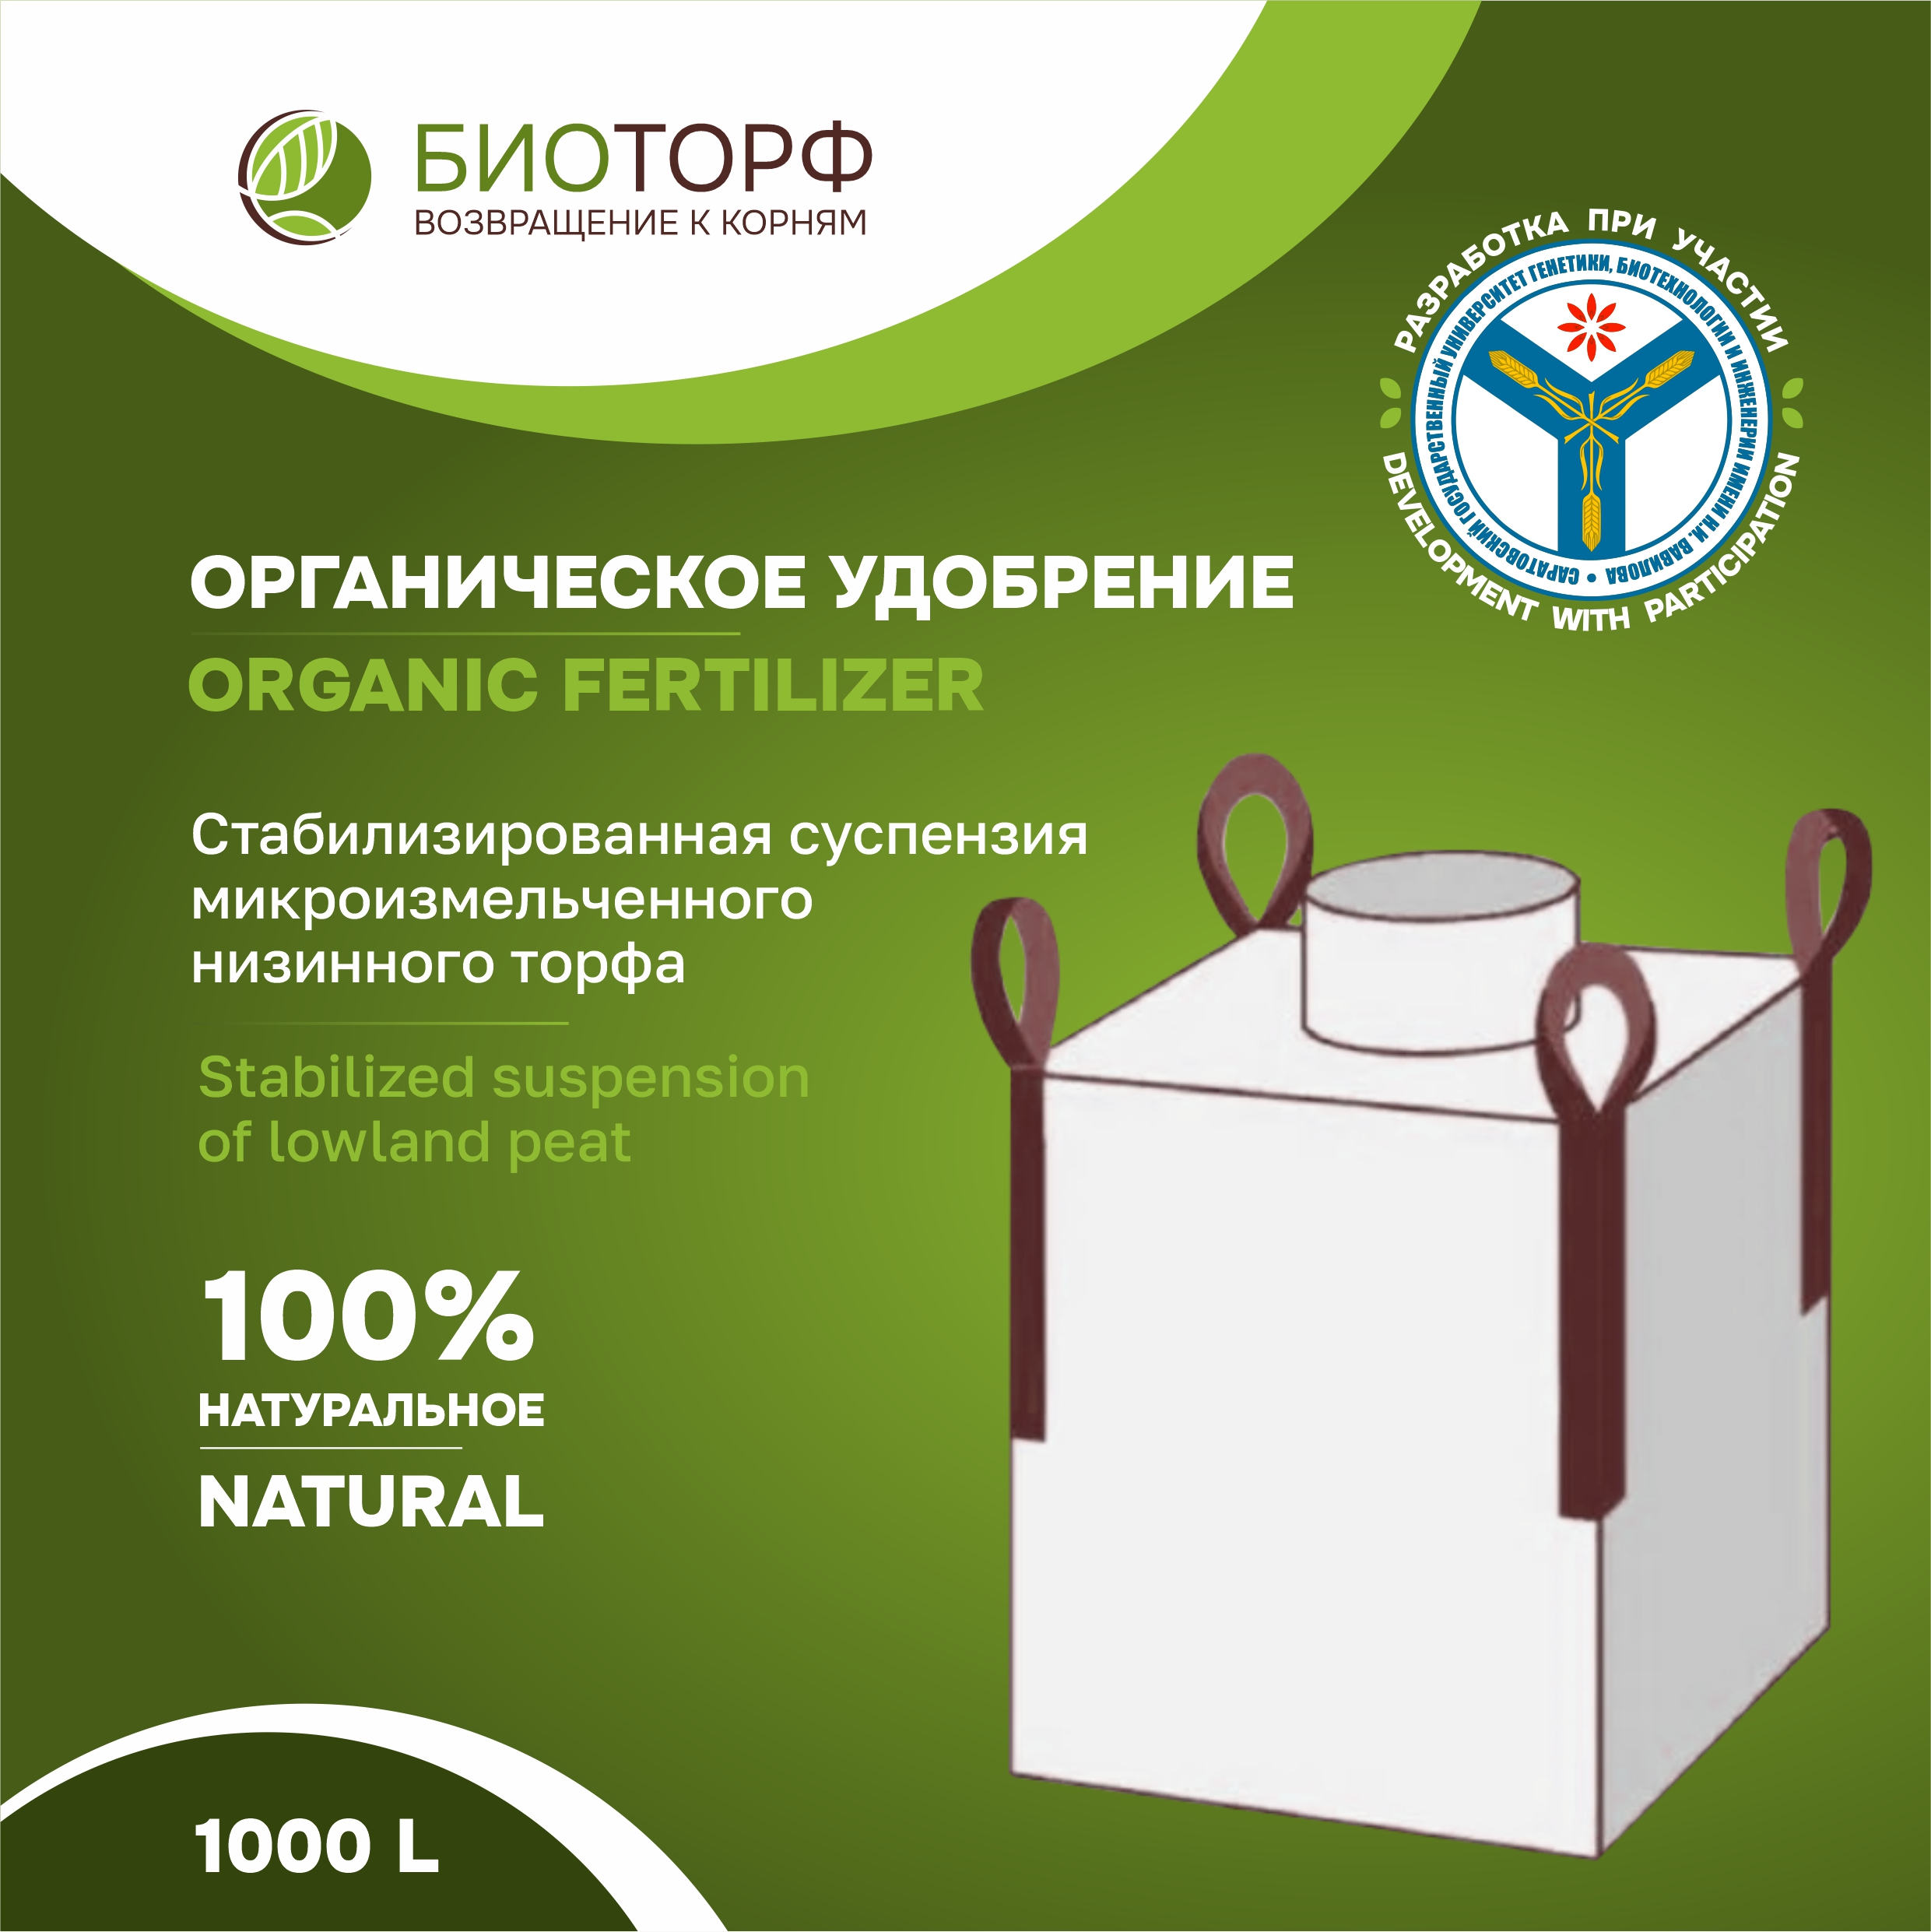 Biotorf, organic pasty fertilizer, 1000l